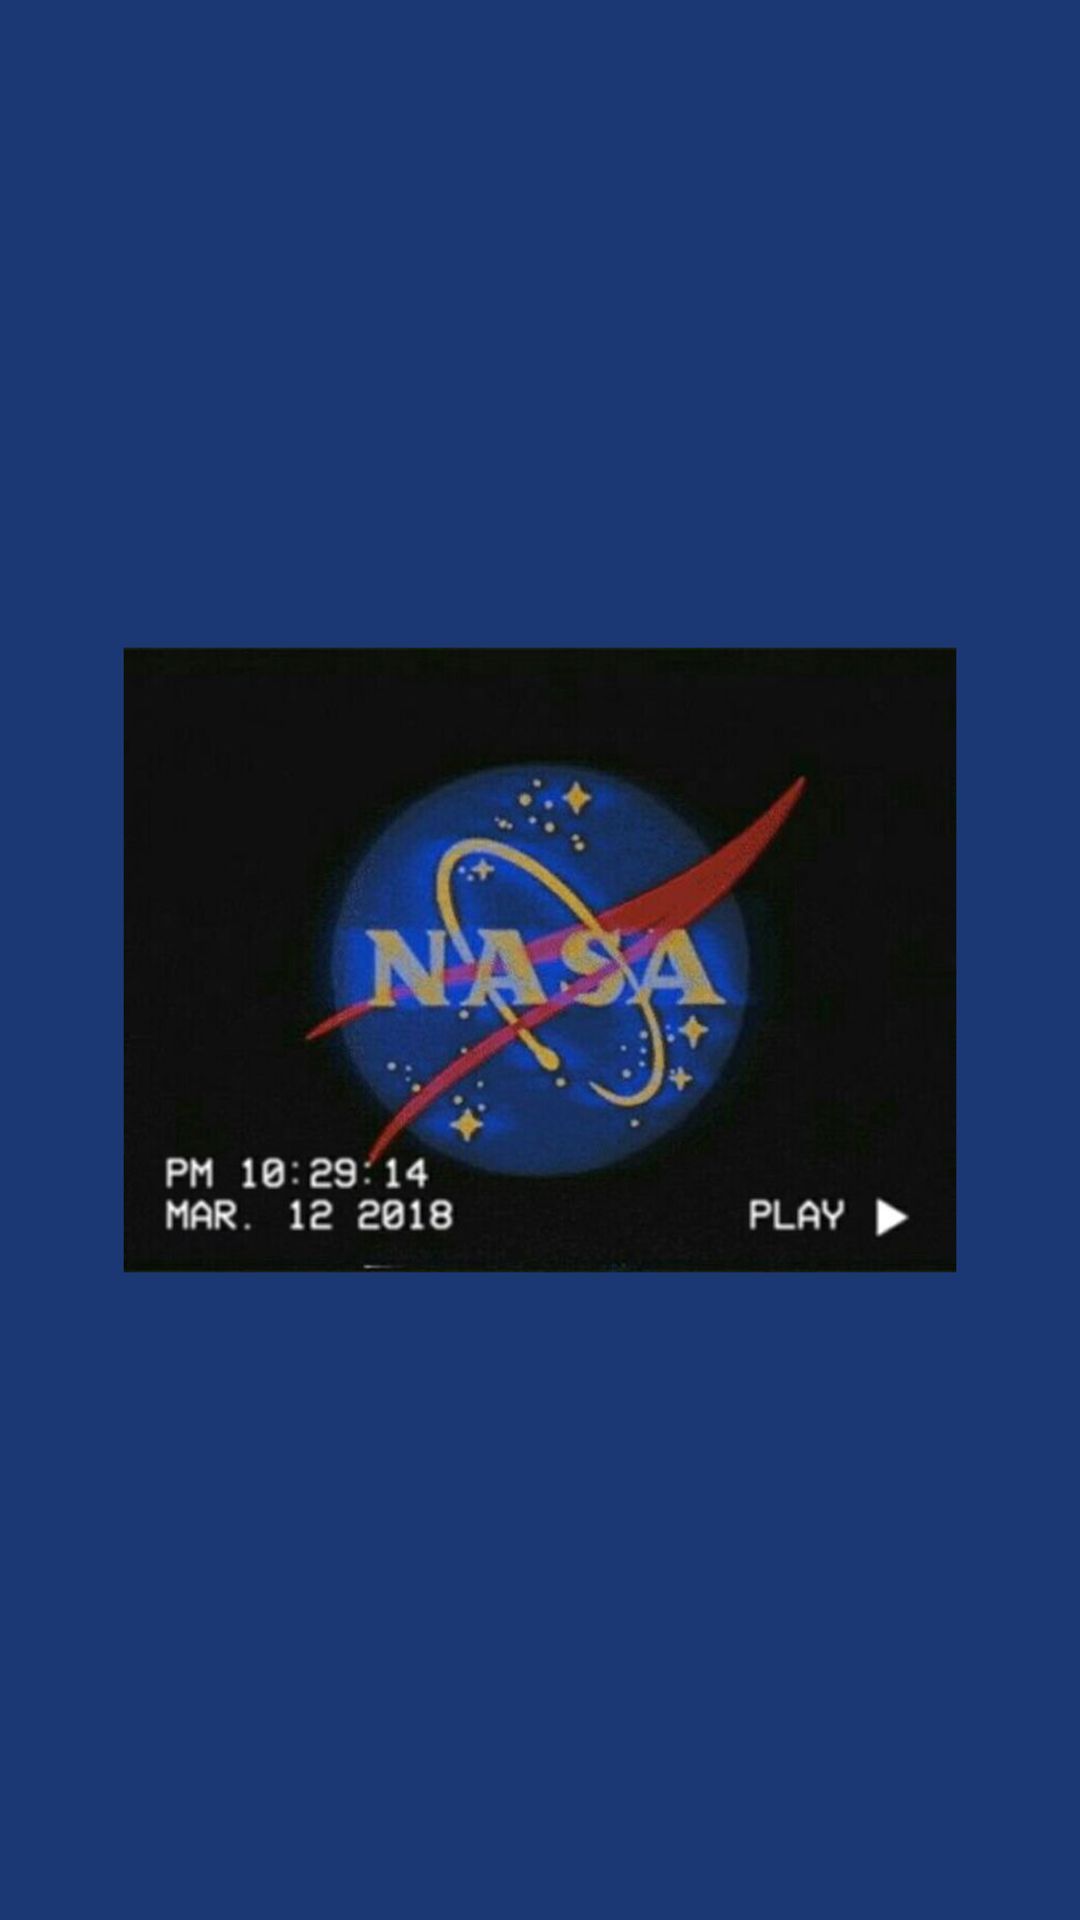 NASA wallpaper for your phone! - NASA, space